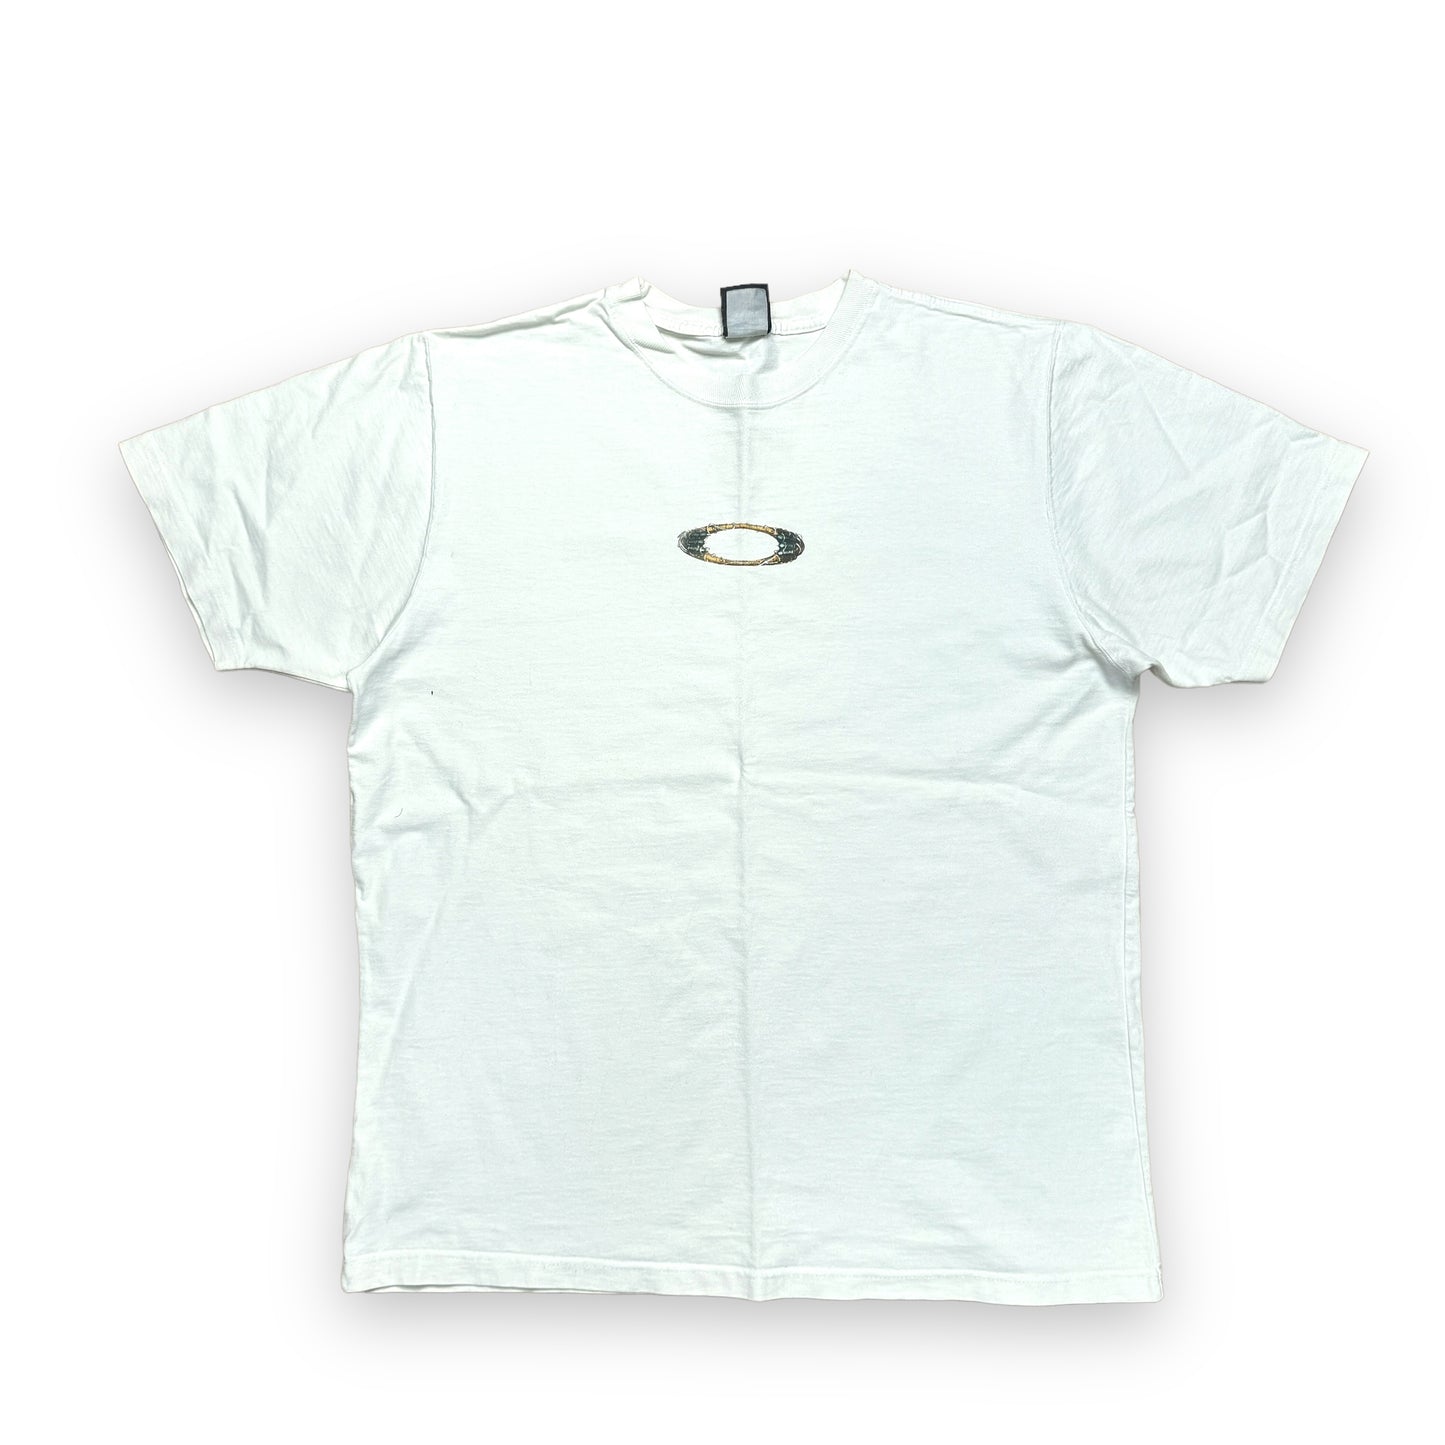 Oakley Detonator Graphic T-Shirt